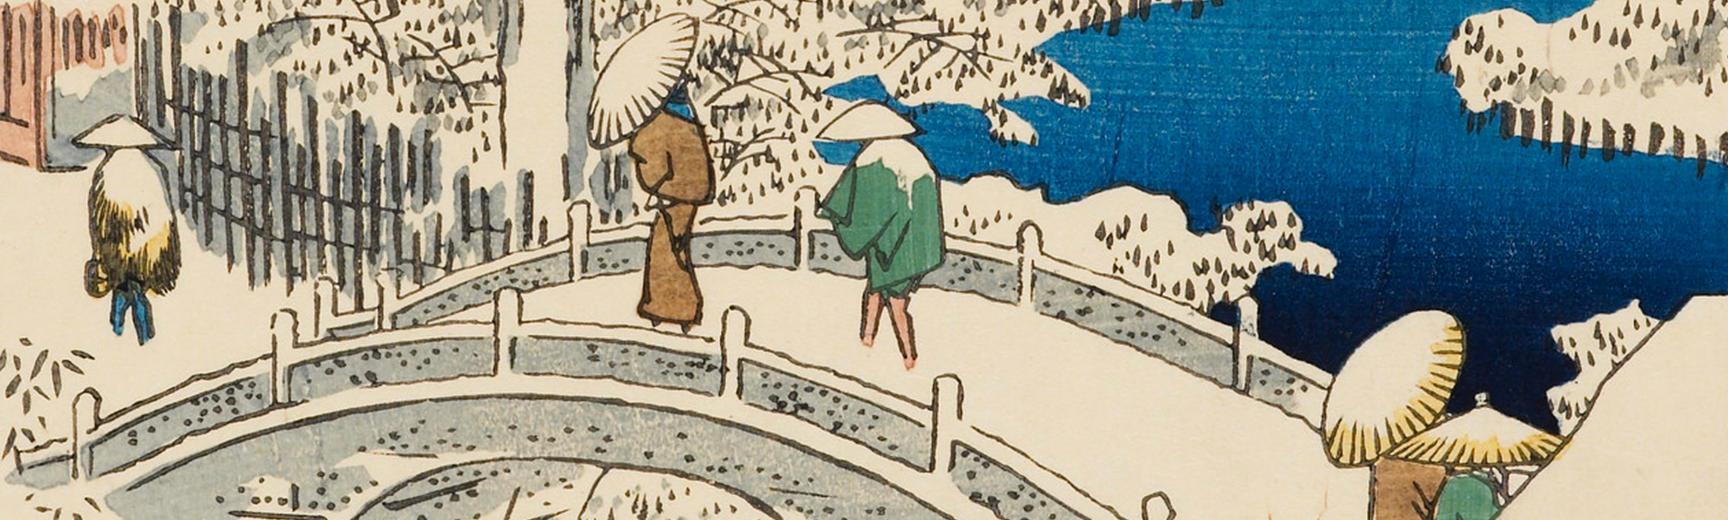 Snowy bridge by Hiroshige